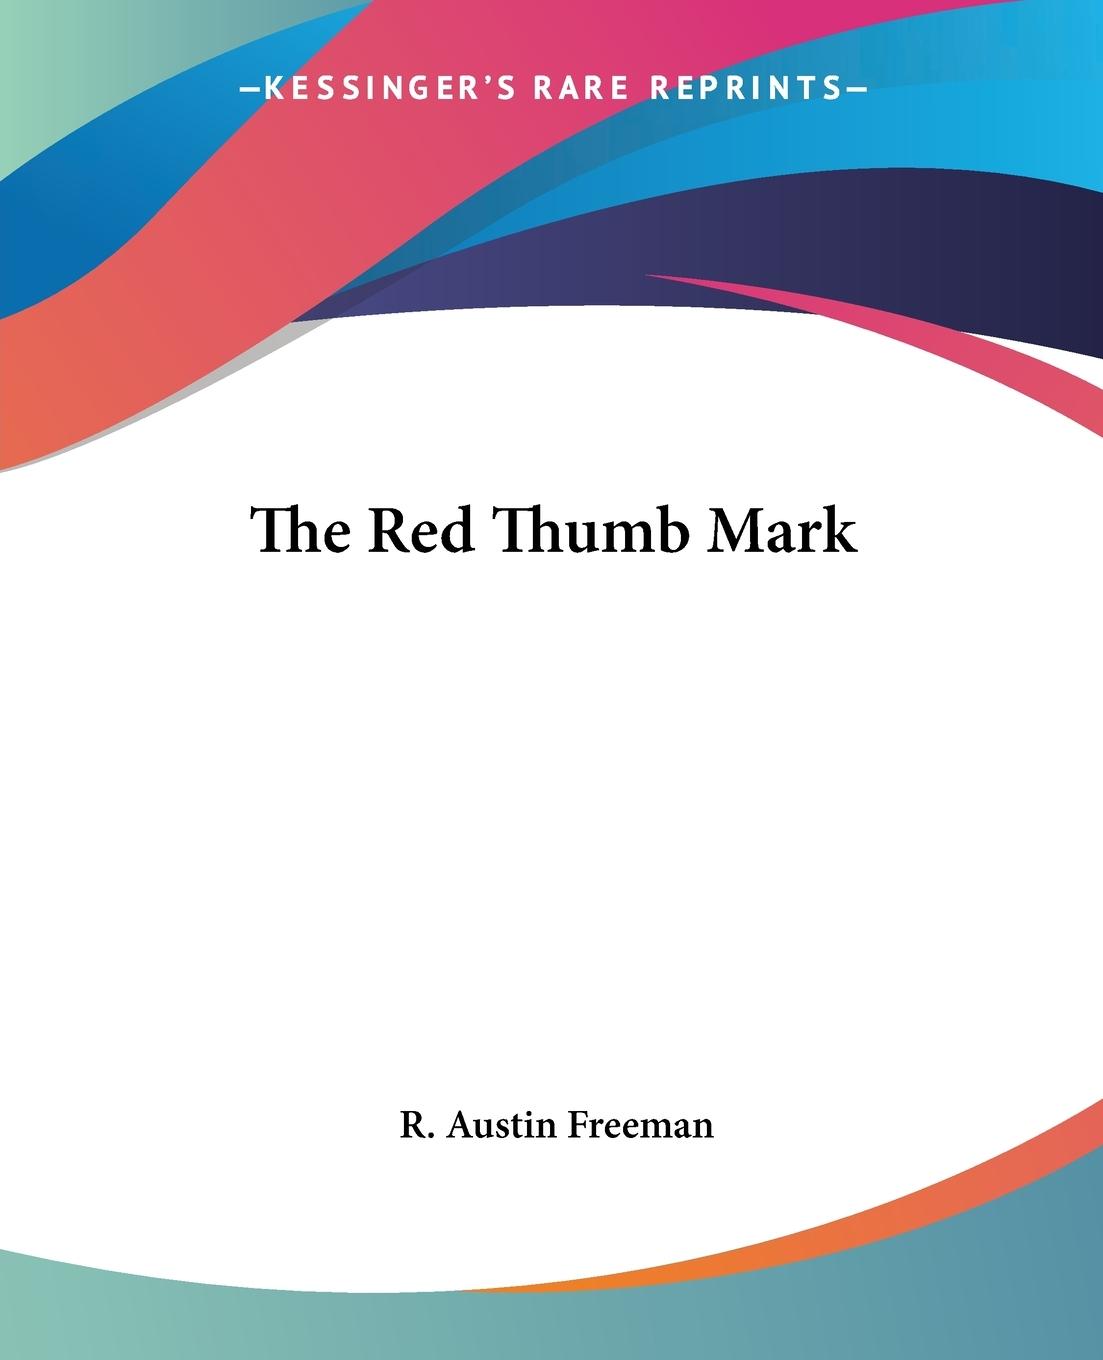 The Red Thumb Mark - Freeman, R. Austin